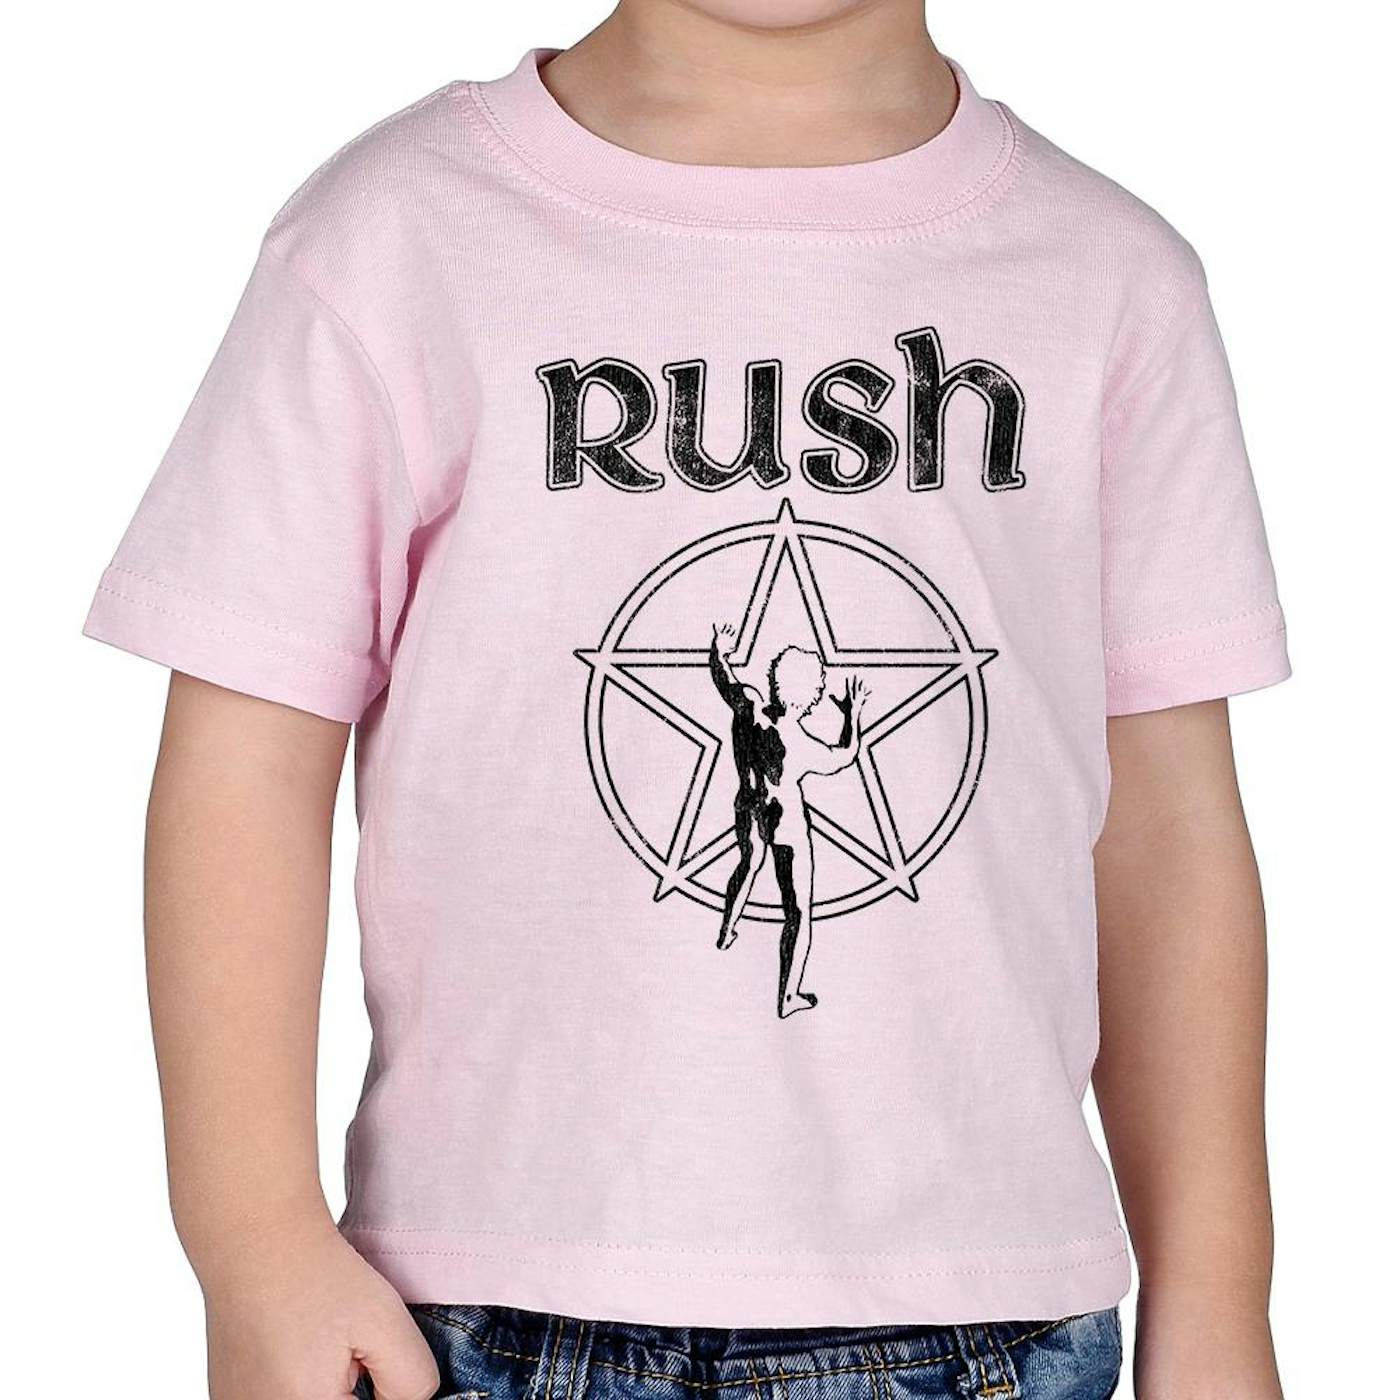 Rush "Starman" Infant T-Shirt in Pink